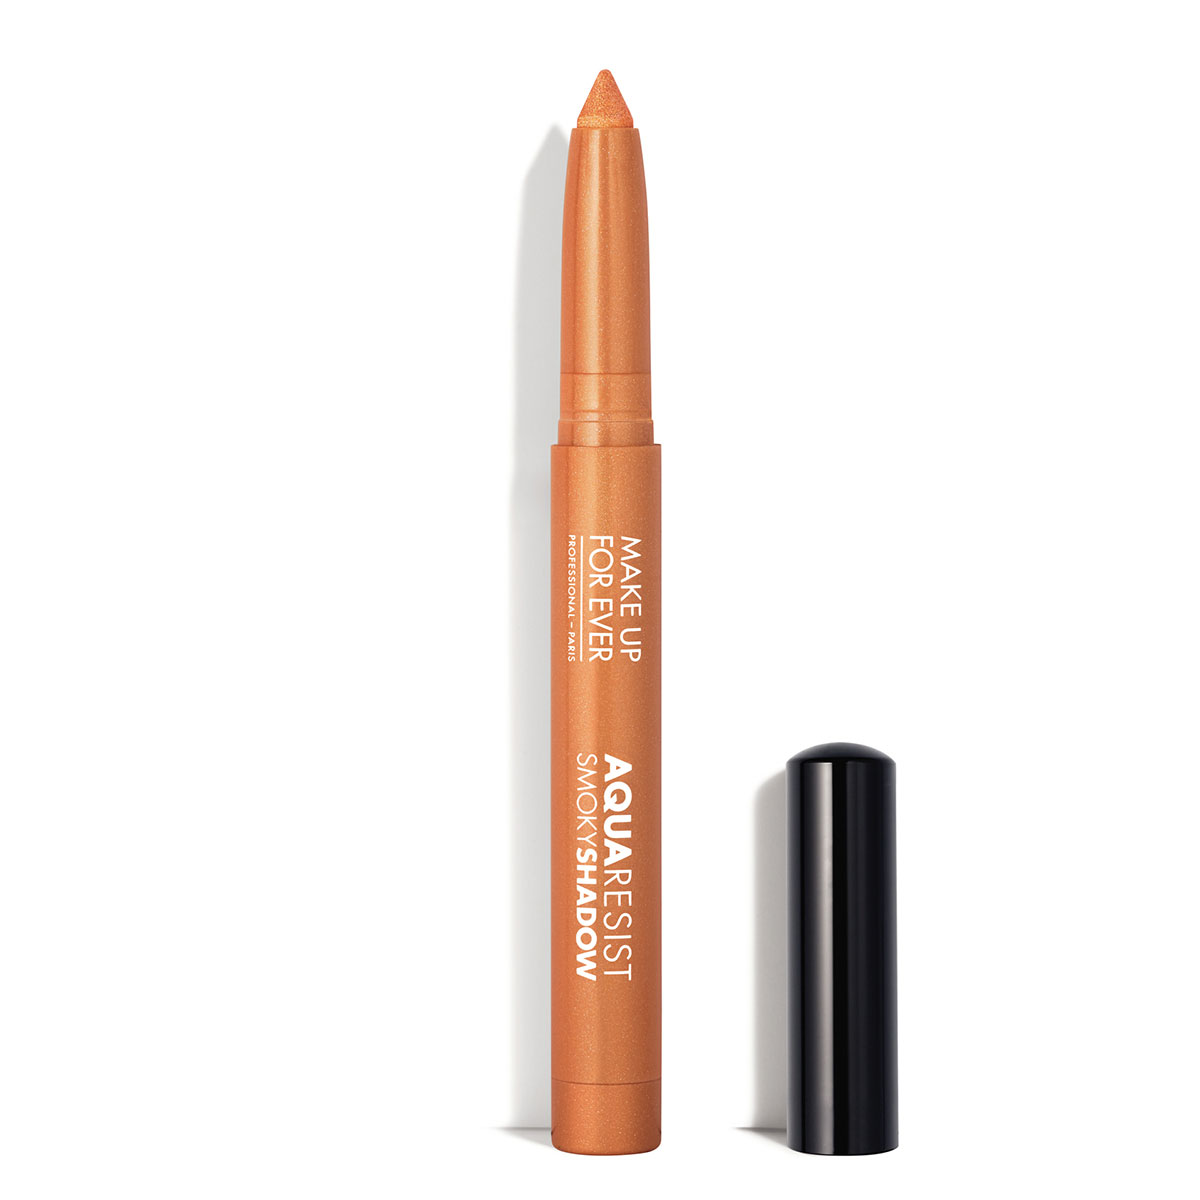 Make Up For Ever Aqua Resist Smoky Shadow Multi Use Eye Color Stick 16 Copper - Reddish Copper